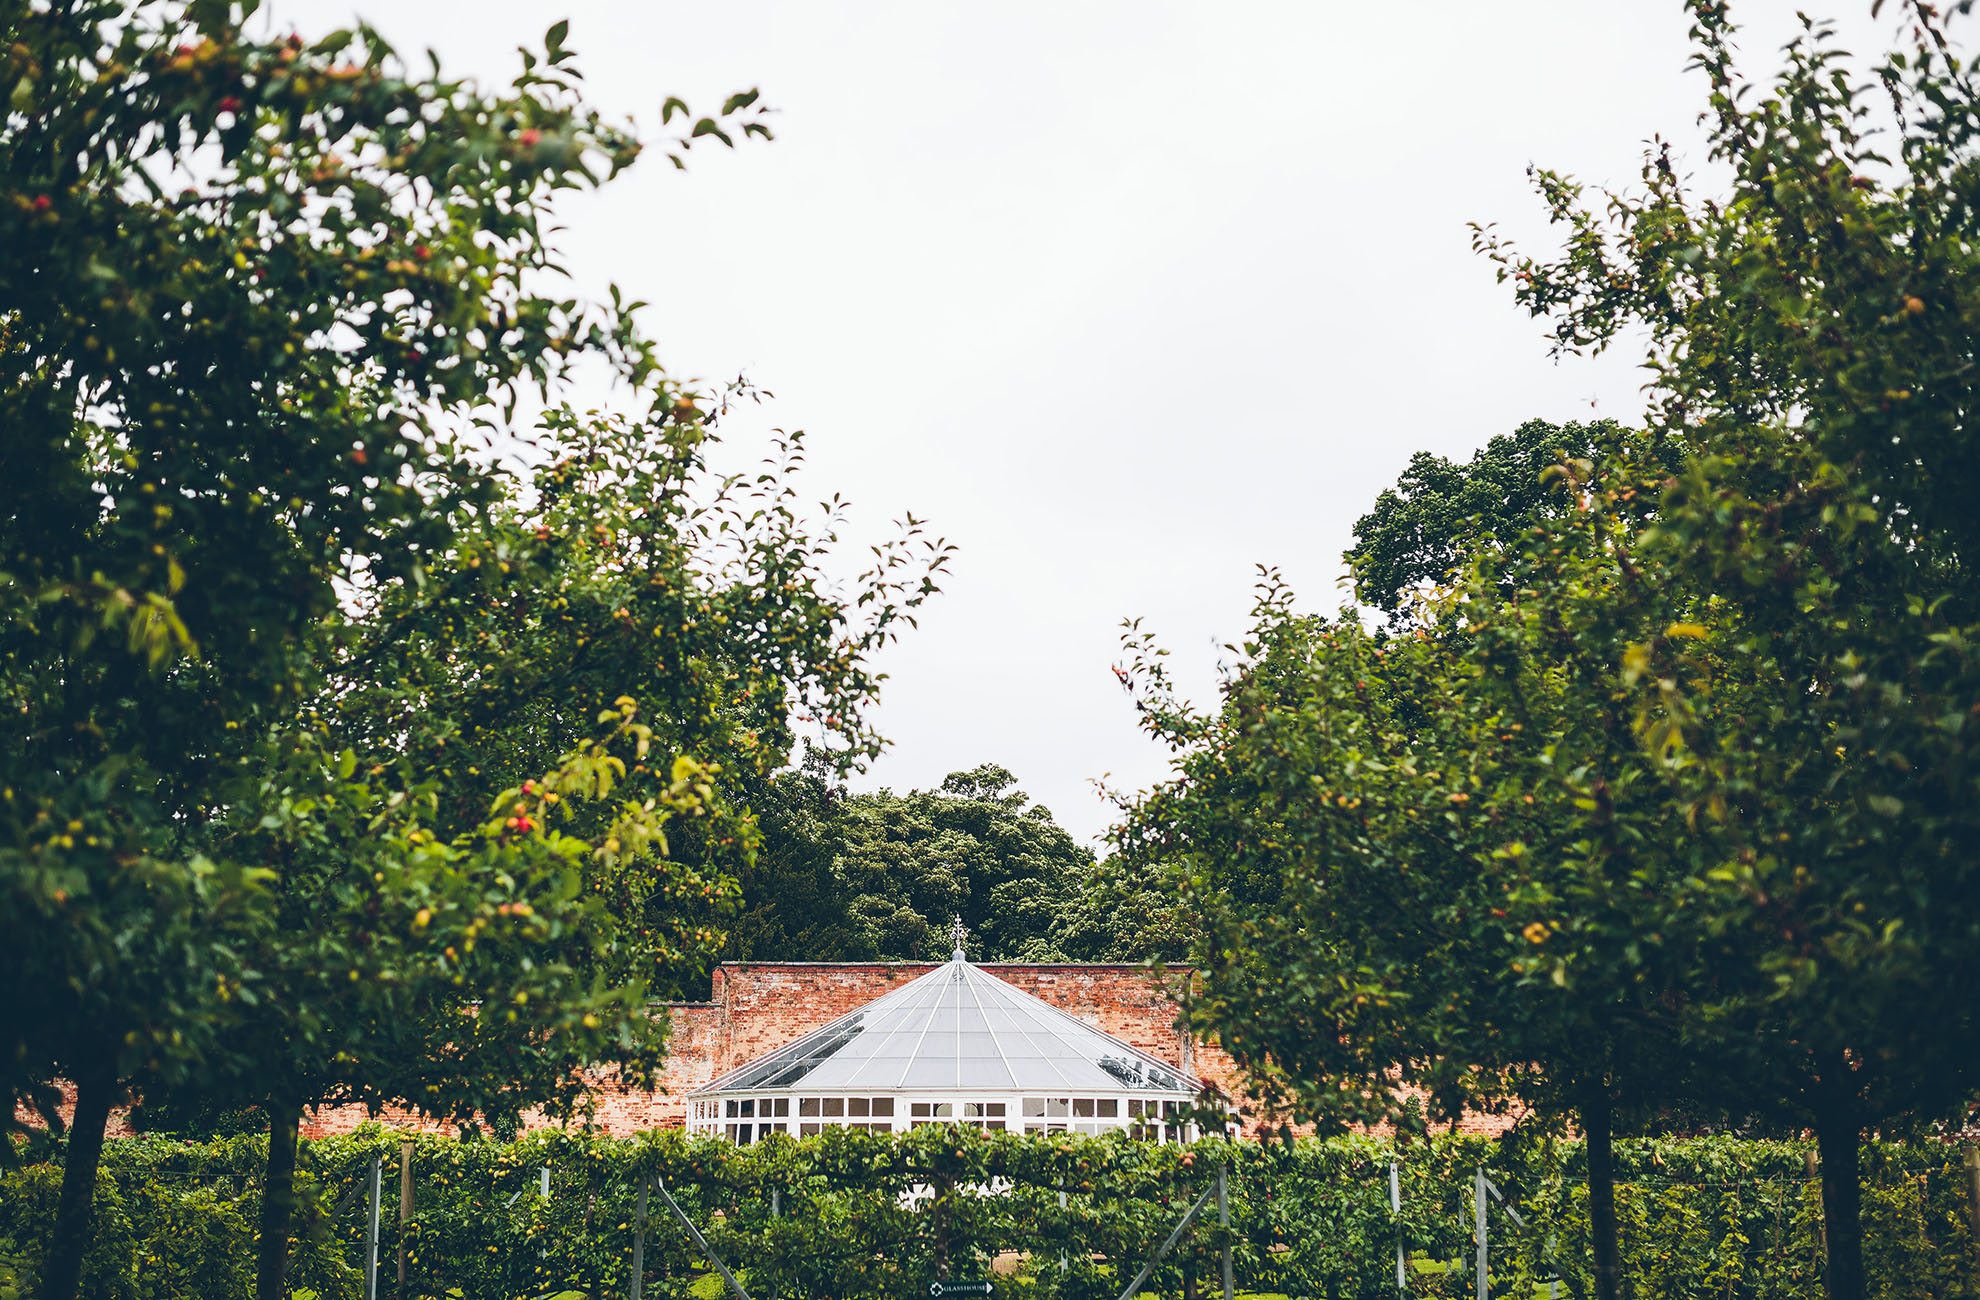 Set amongst a fruit tree maze the beautiful Edwardian Glasshouse is perfect for wedding ceremonies